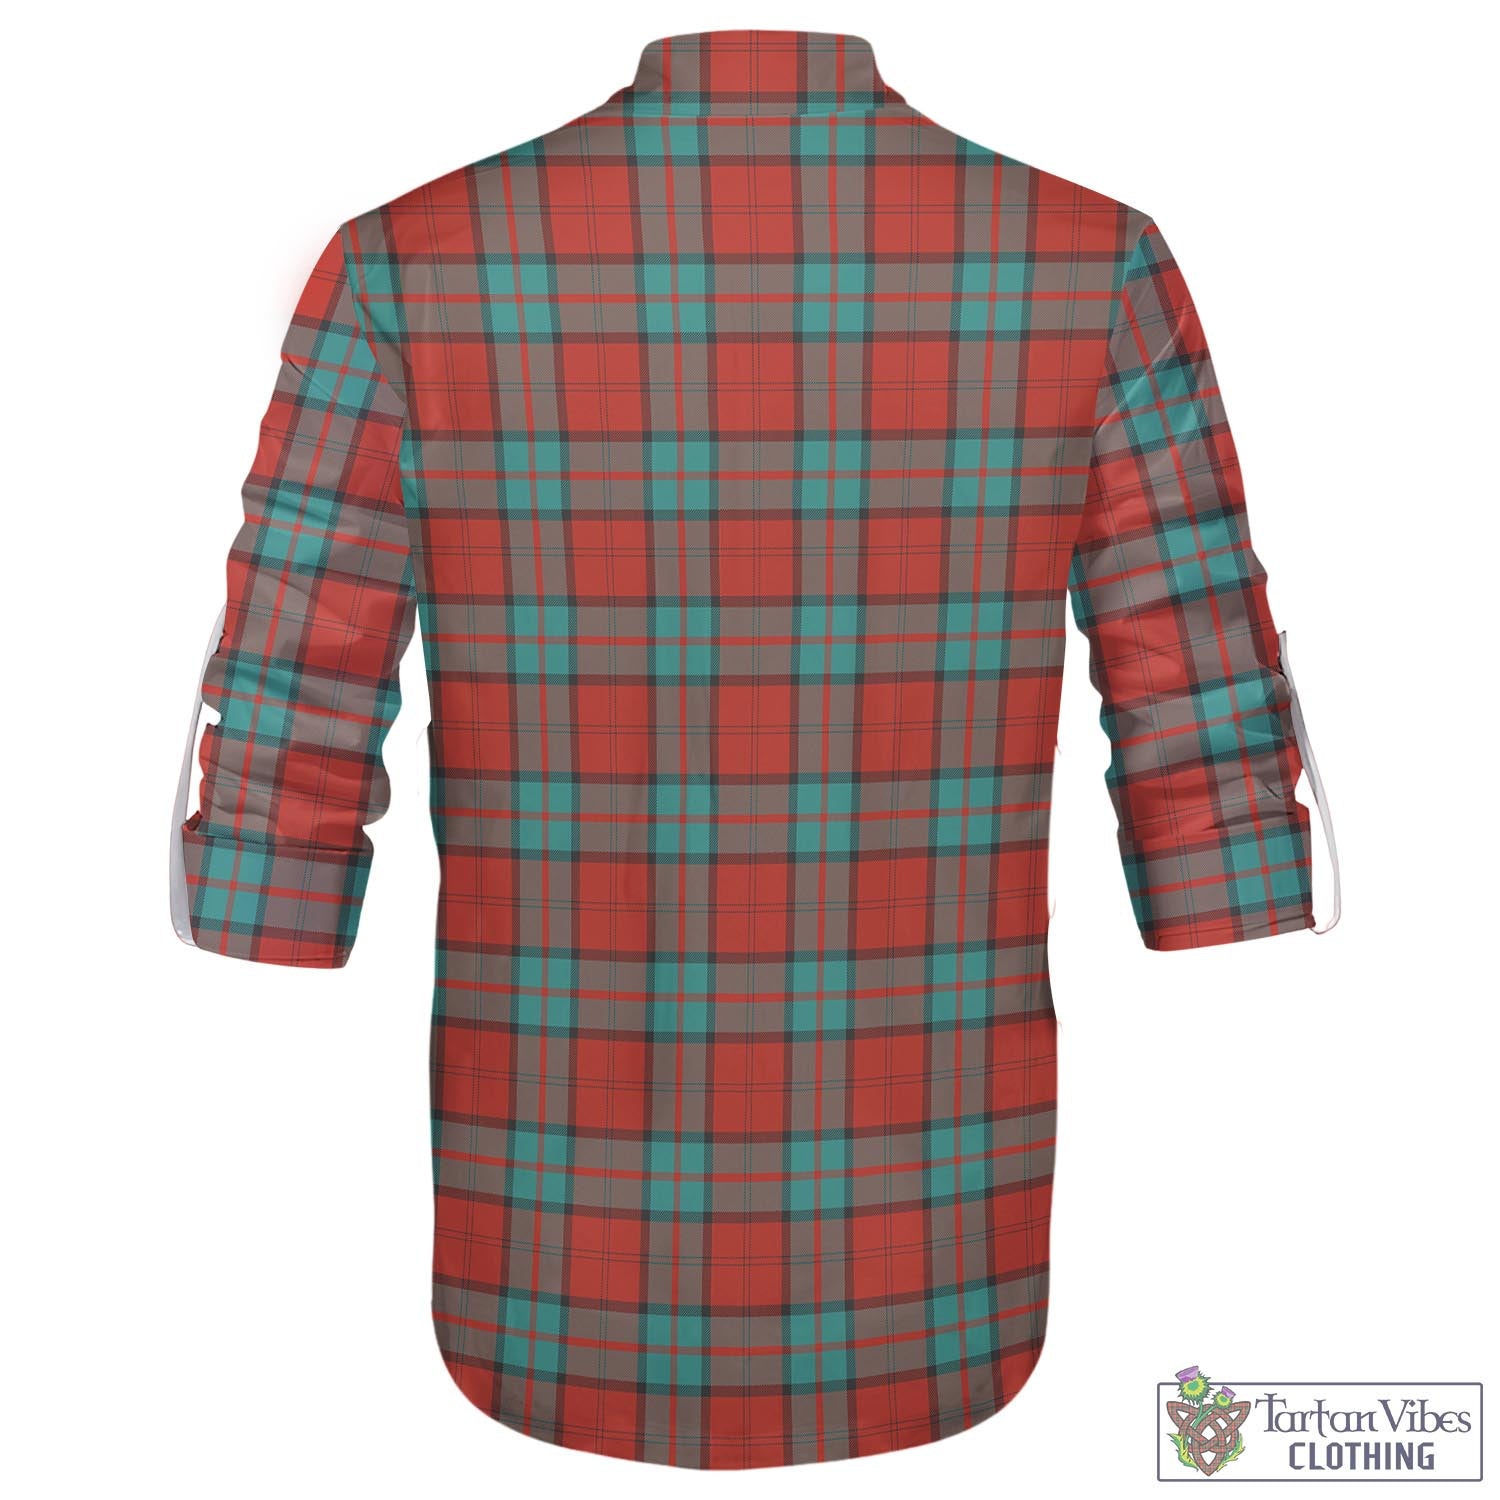 Tartan Vibes Clothing Dunbar Ancient Tartan Men's Scottish Traditional Jacobite Ghillie Kilt Shirt